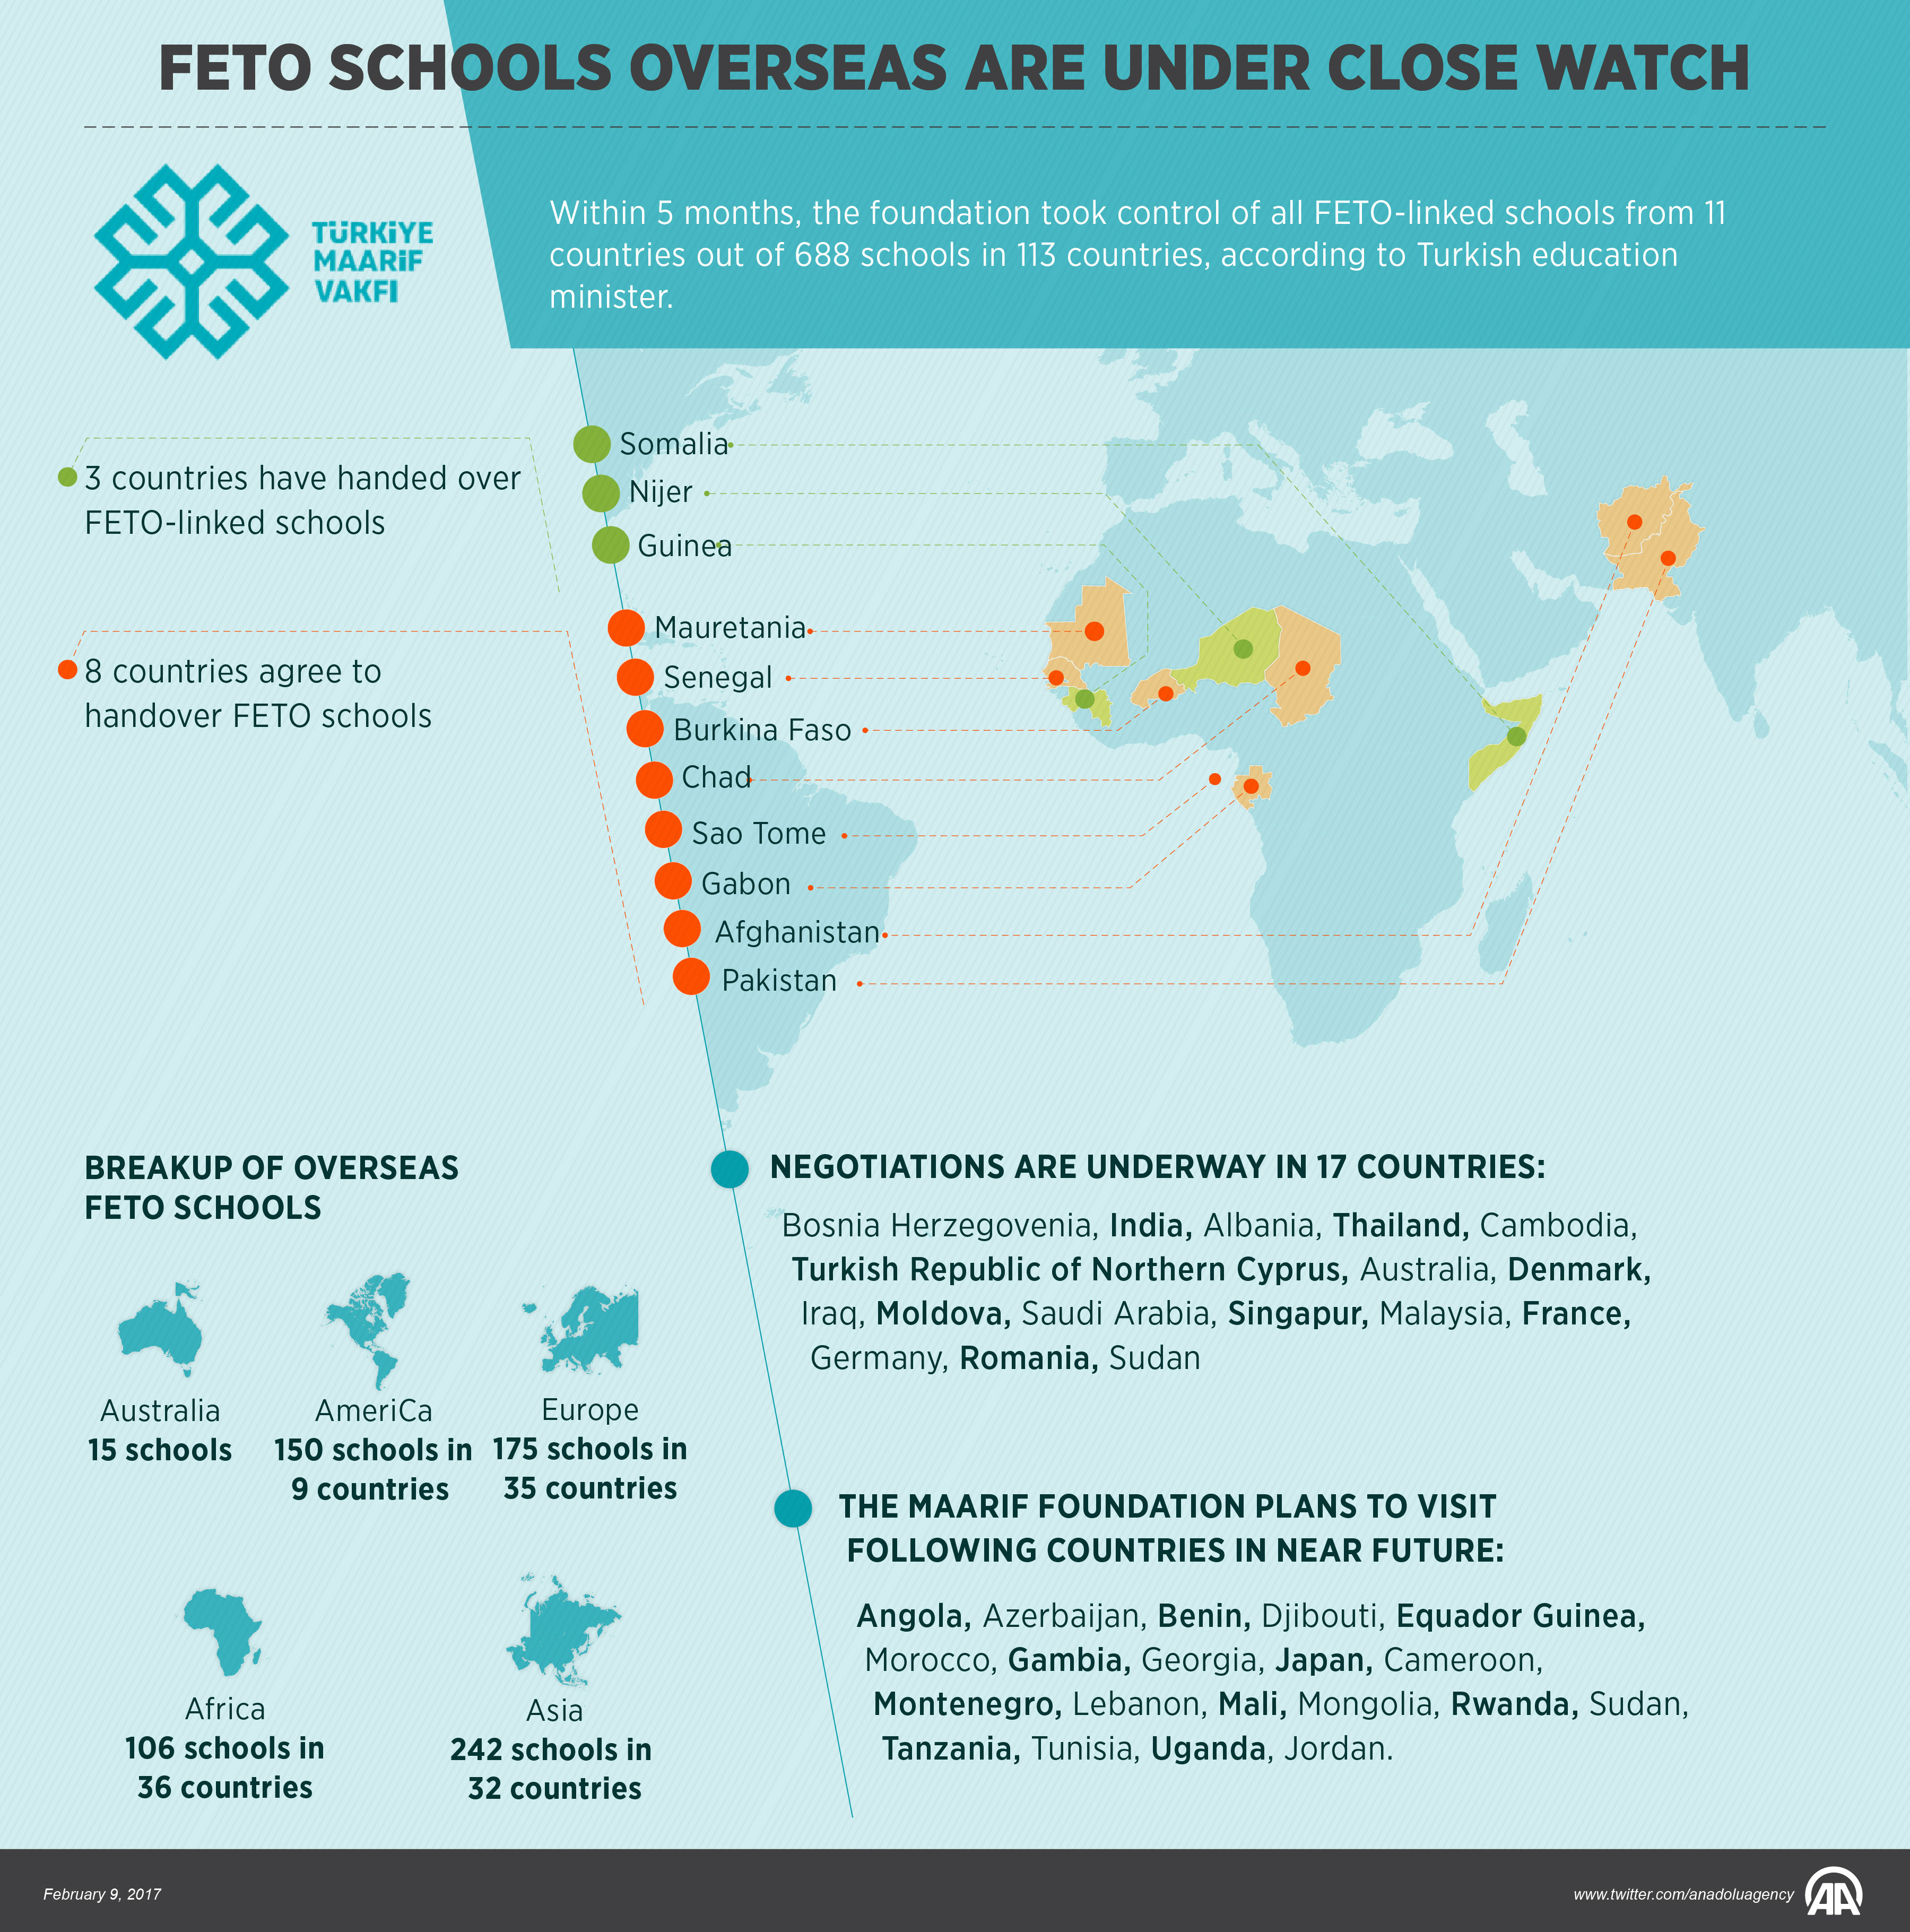 Turkey keeps FETO schools overseas under close watch